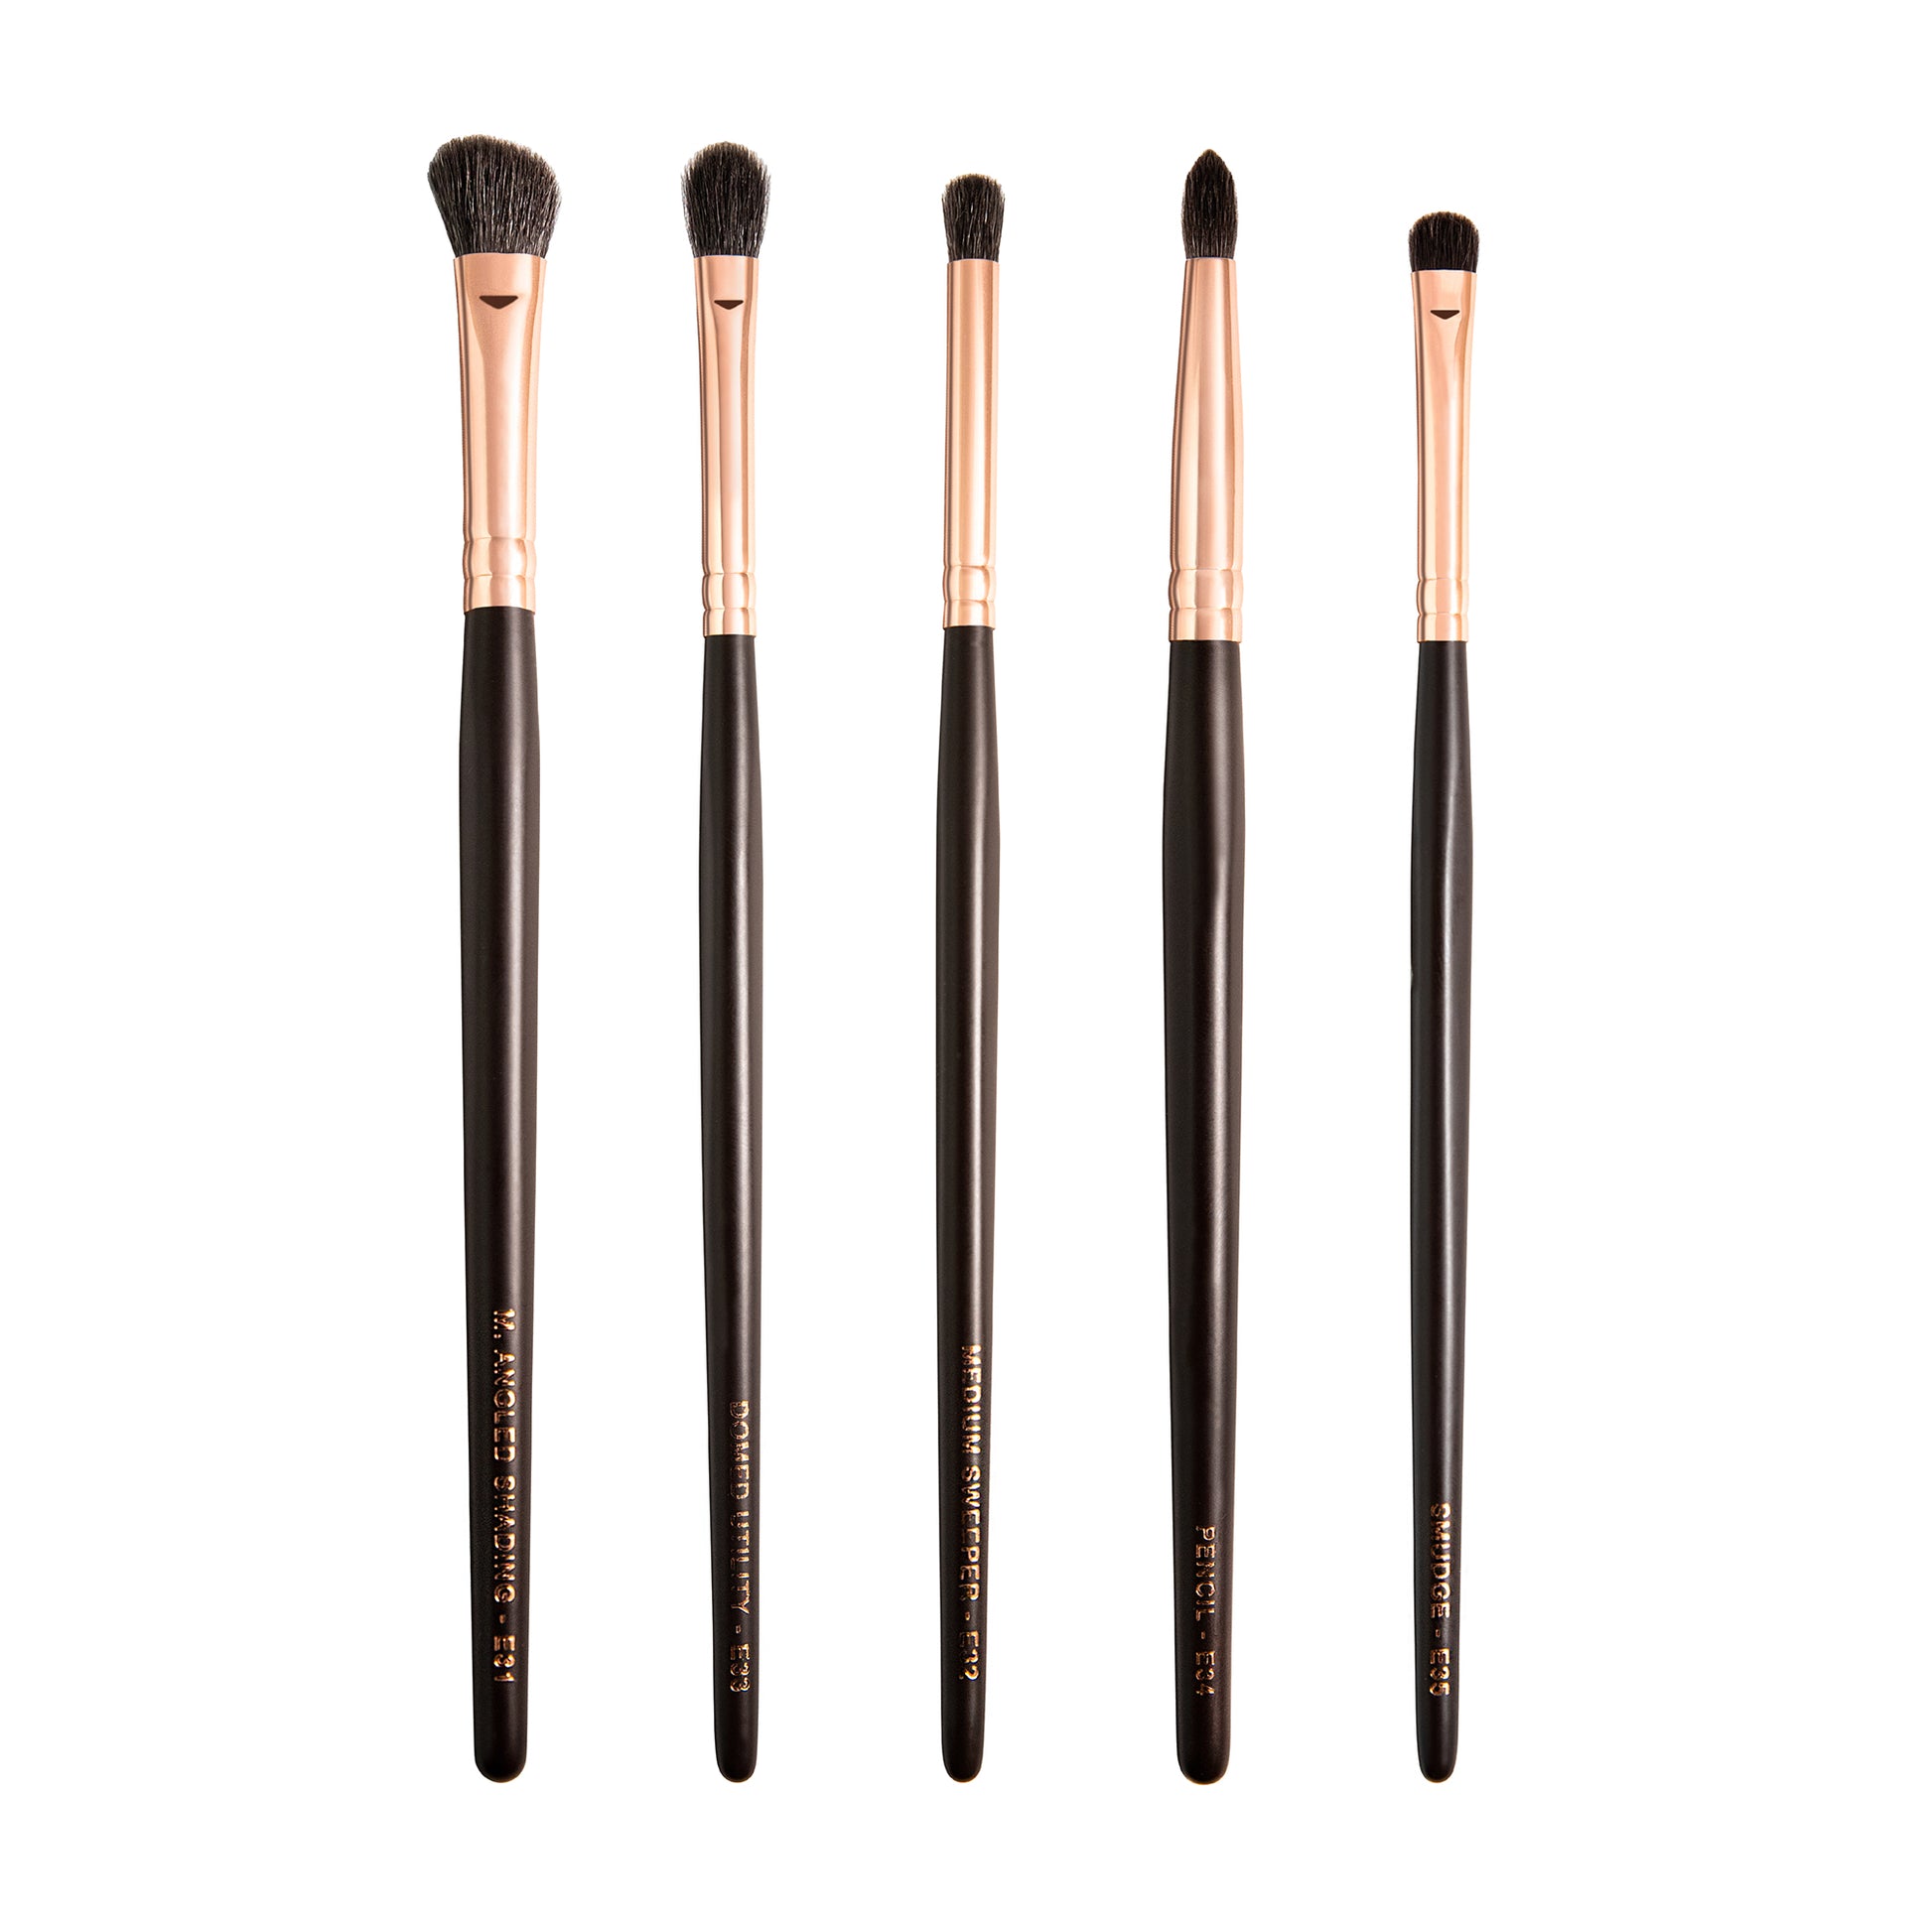 頂級灰鼠混羊毛眼部刷具5入組 / 眼影刷組 Rose Gold Makeup Brushes Set/ pro eyeshadow brush 